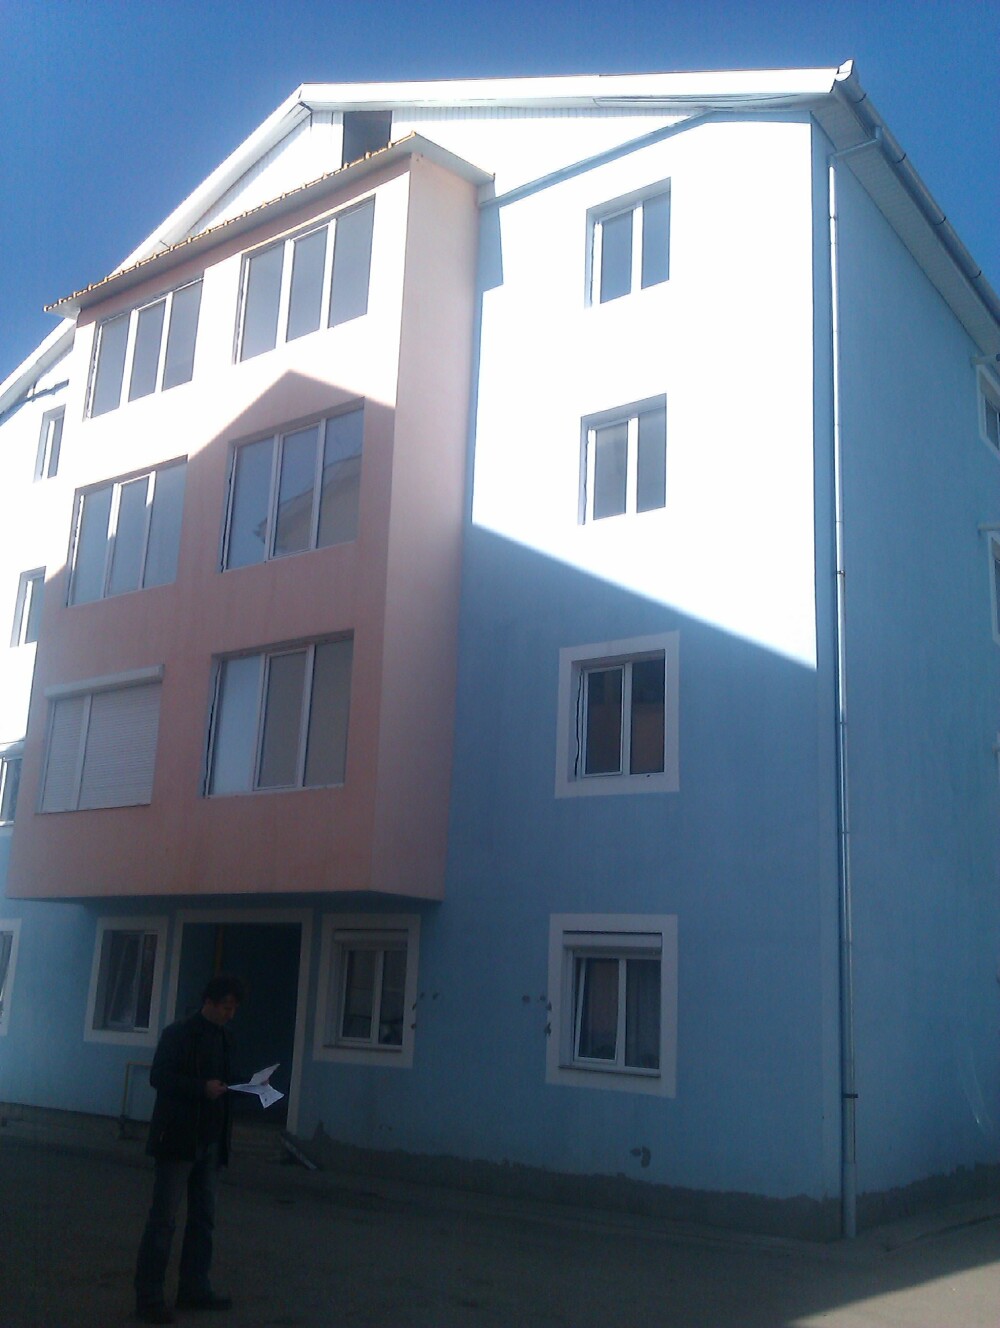 7.000 euro un apartament nou cu o camera si 9800 euro cu doua camere. Unde le gasesti - Imaginea 2